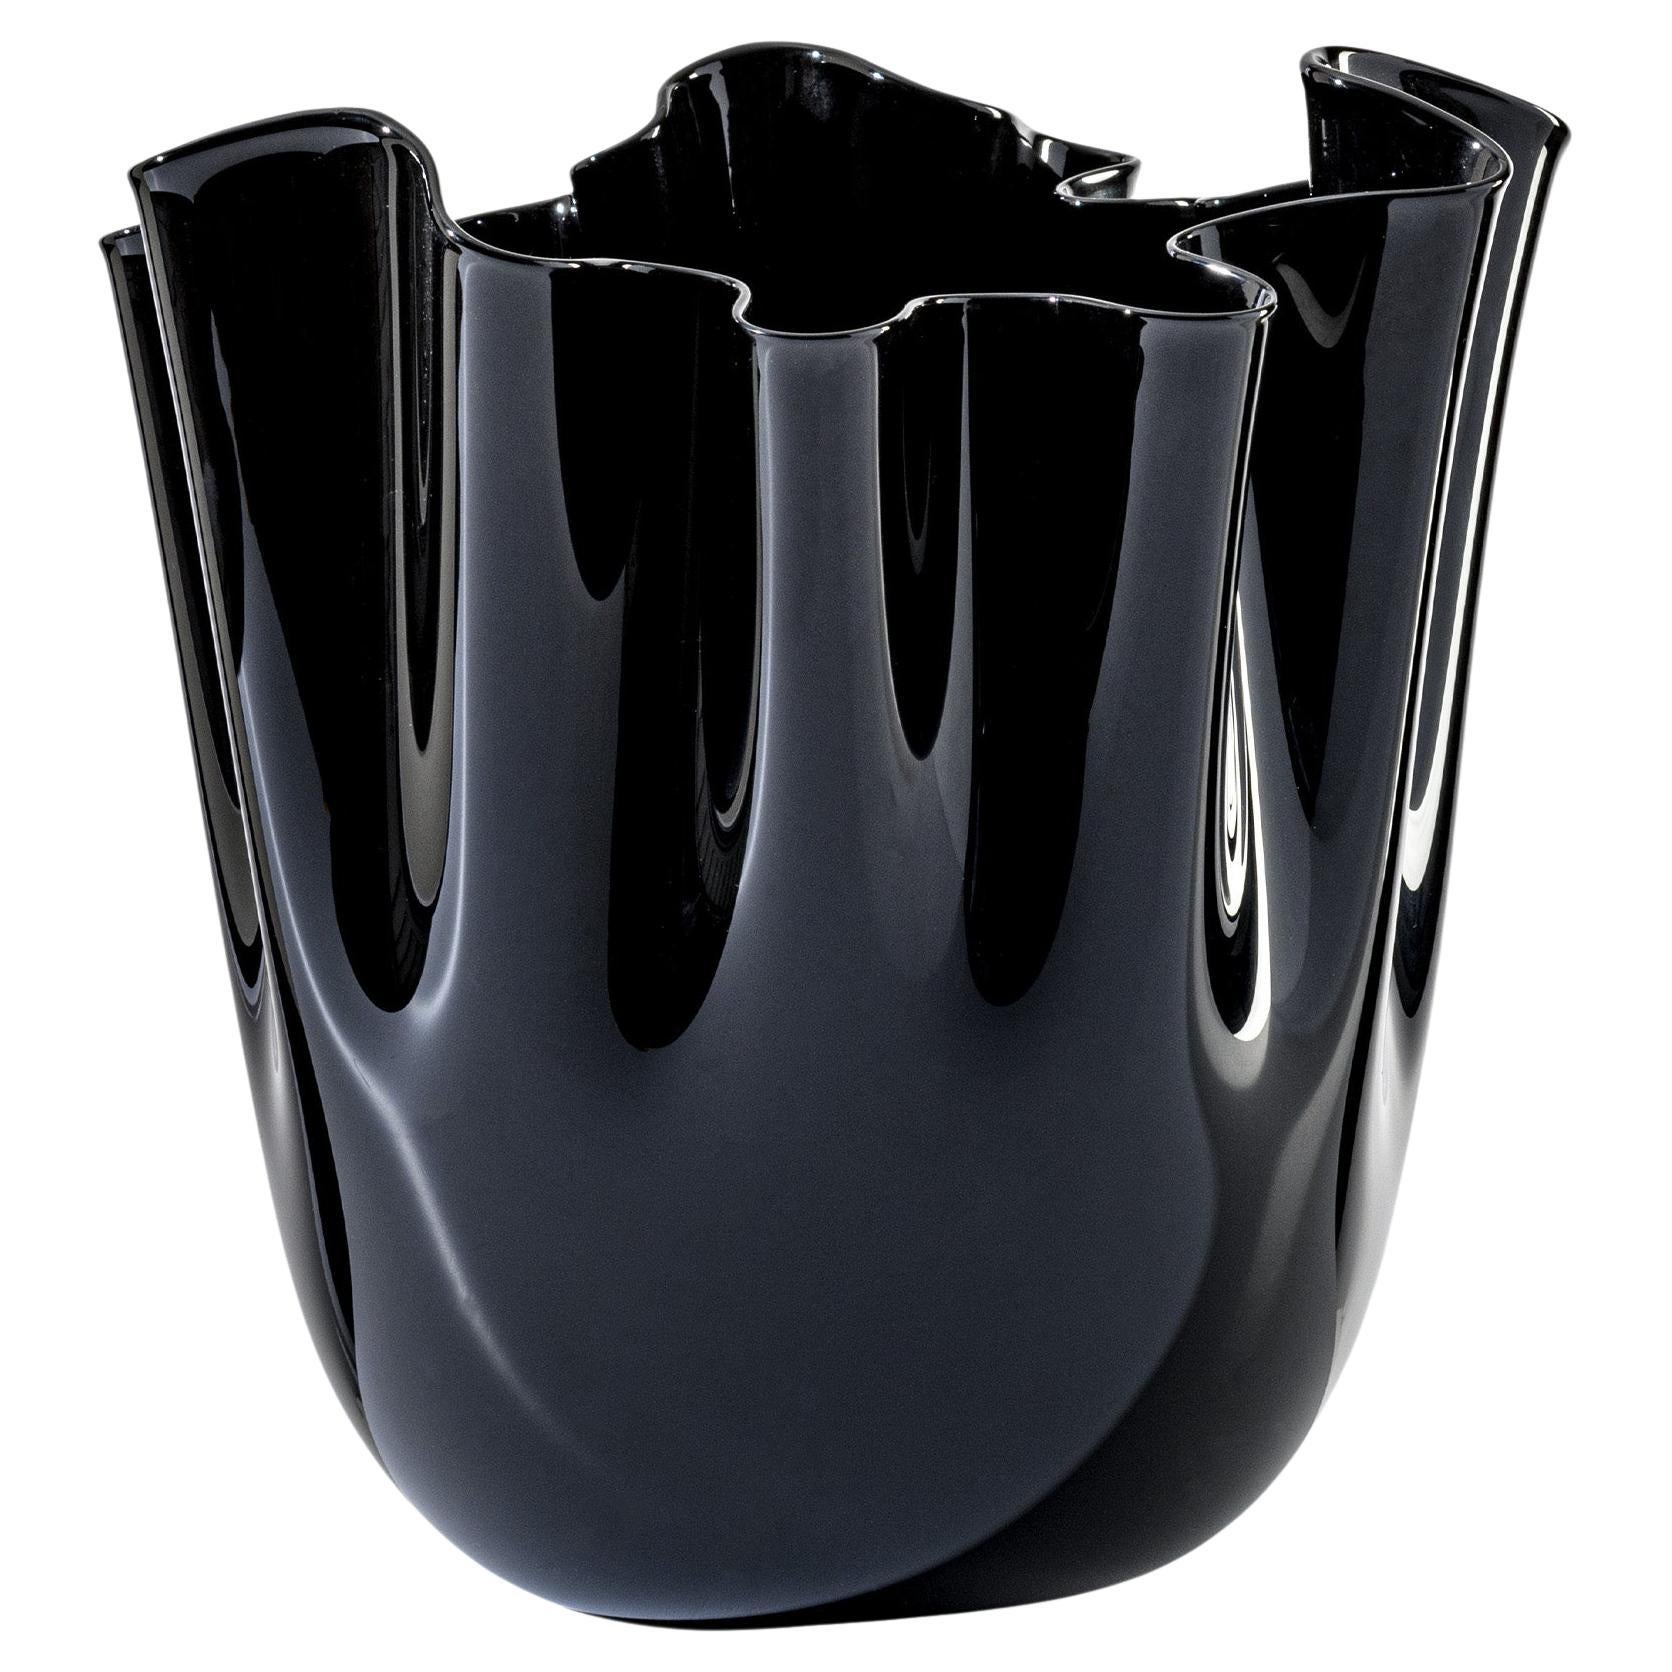 Fazzoletto Opalino Grand vase en verre noir par Fulvio Bianconi et Venini